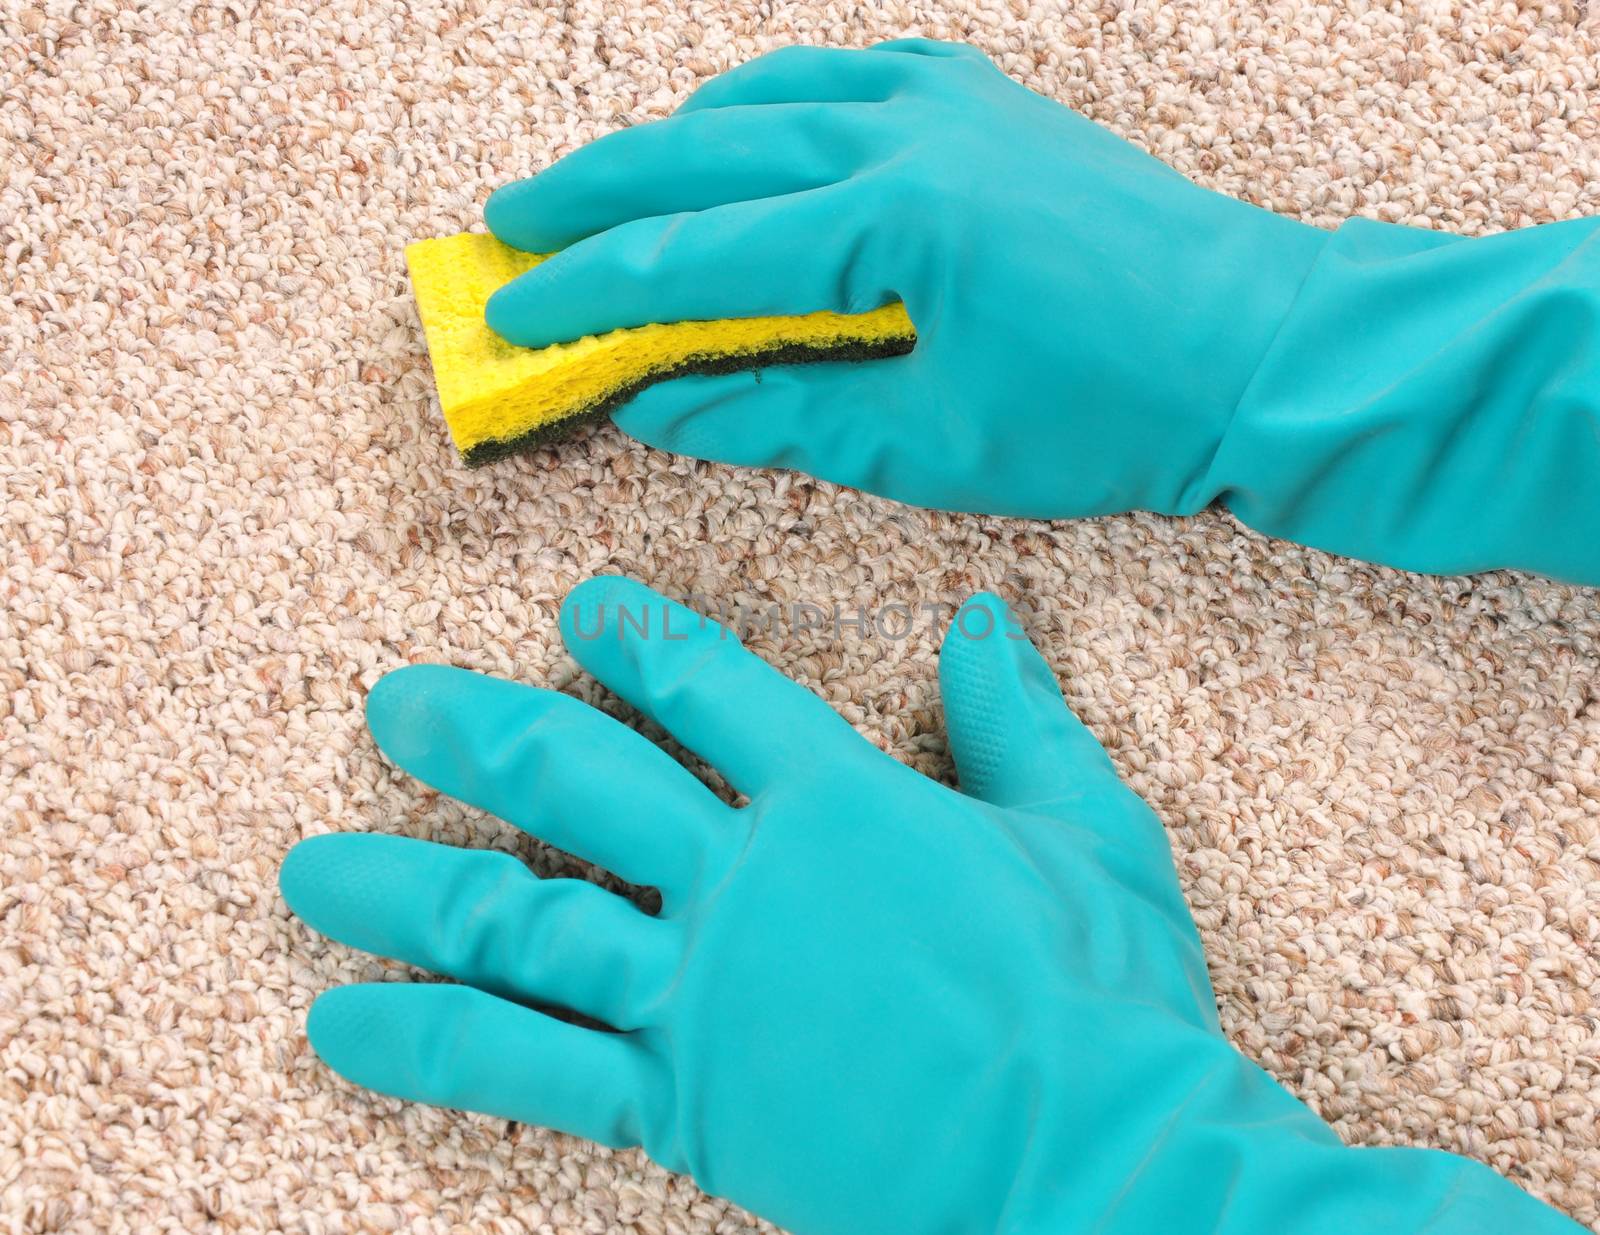 Cleaning carpet by svanhorn